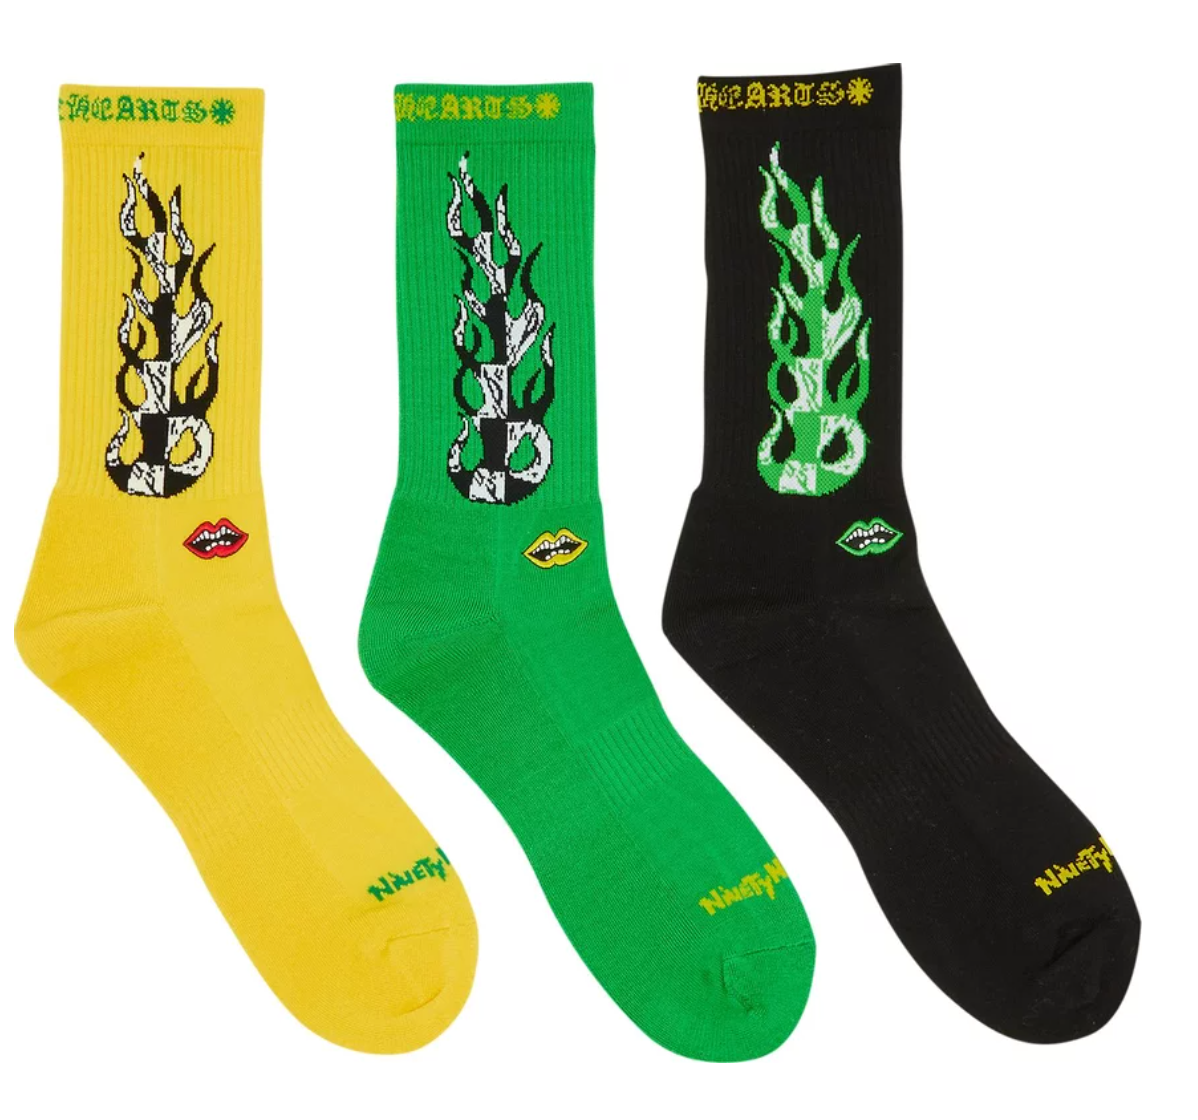 Matty Boy Flame Socks 'Green/Yellow/Black' Pack